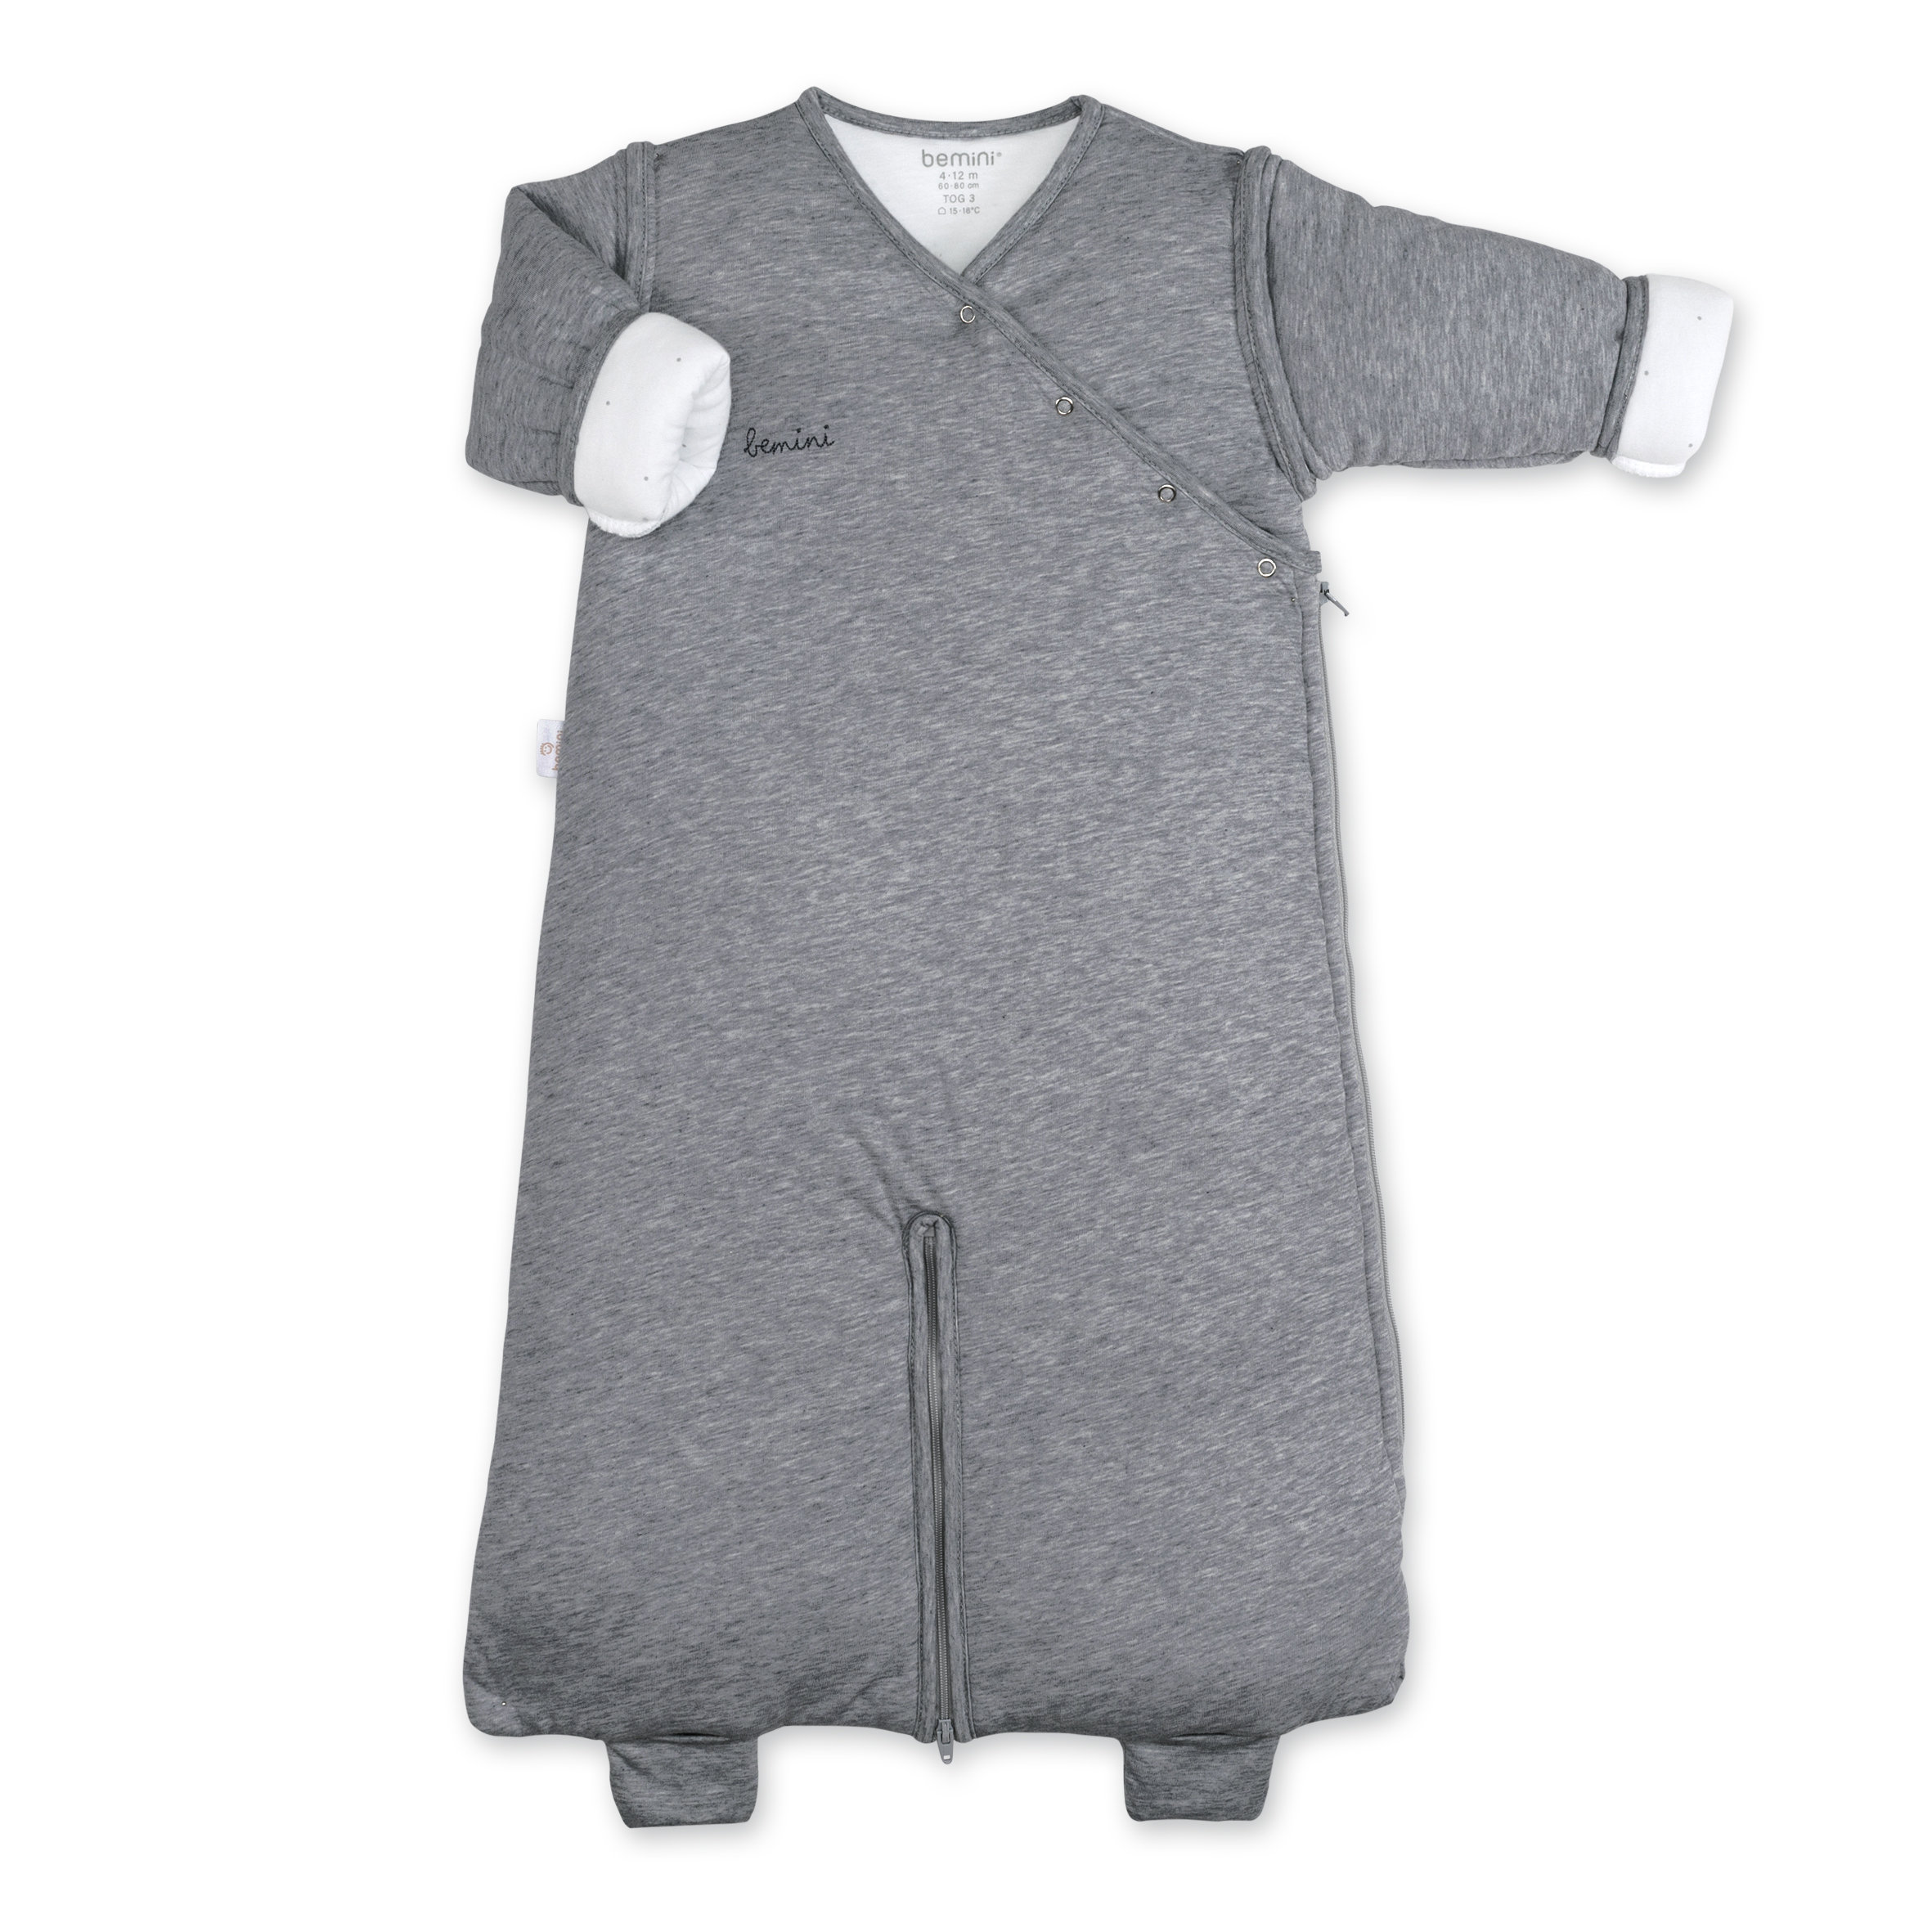 Pijama Saco de Dormir 0-3 meses Magic Bag Mix Grey Pady Jersey | Bemini